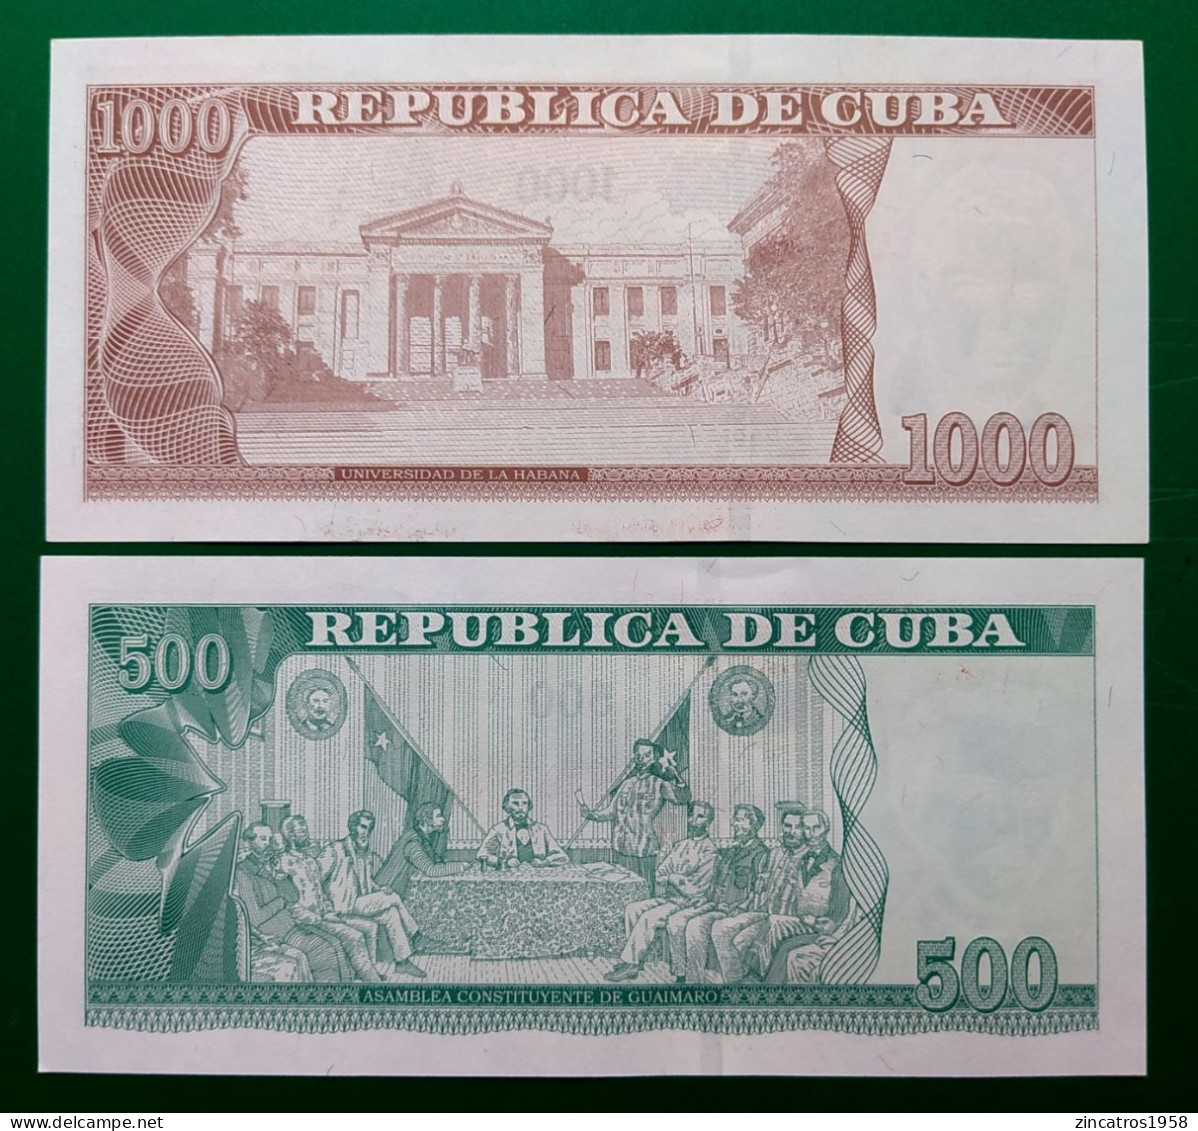 Cuba / 500 Pesos 2022 Ignacio Agramonte UNC P. 131 + 1000 Pesos 2021 Julio Antonio Mella UNC P. 132 CUP ++ Lower Price + - Cuba